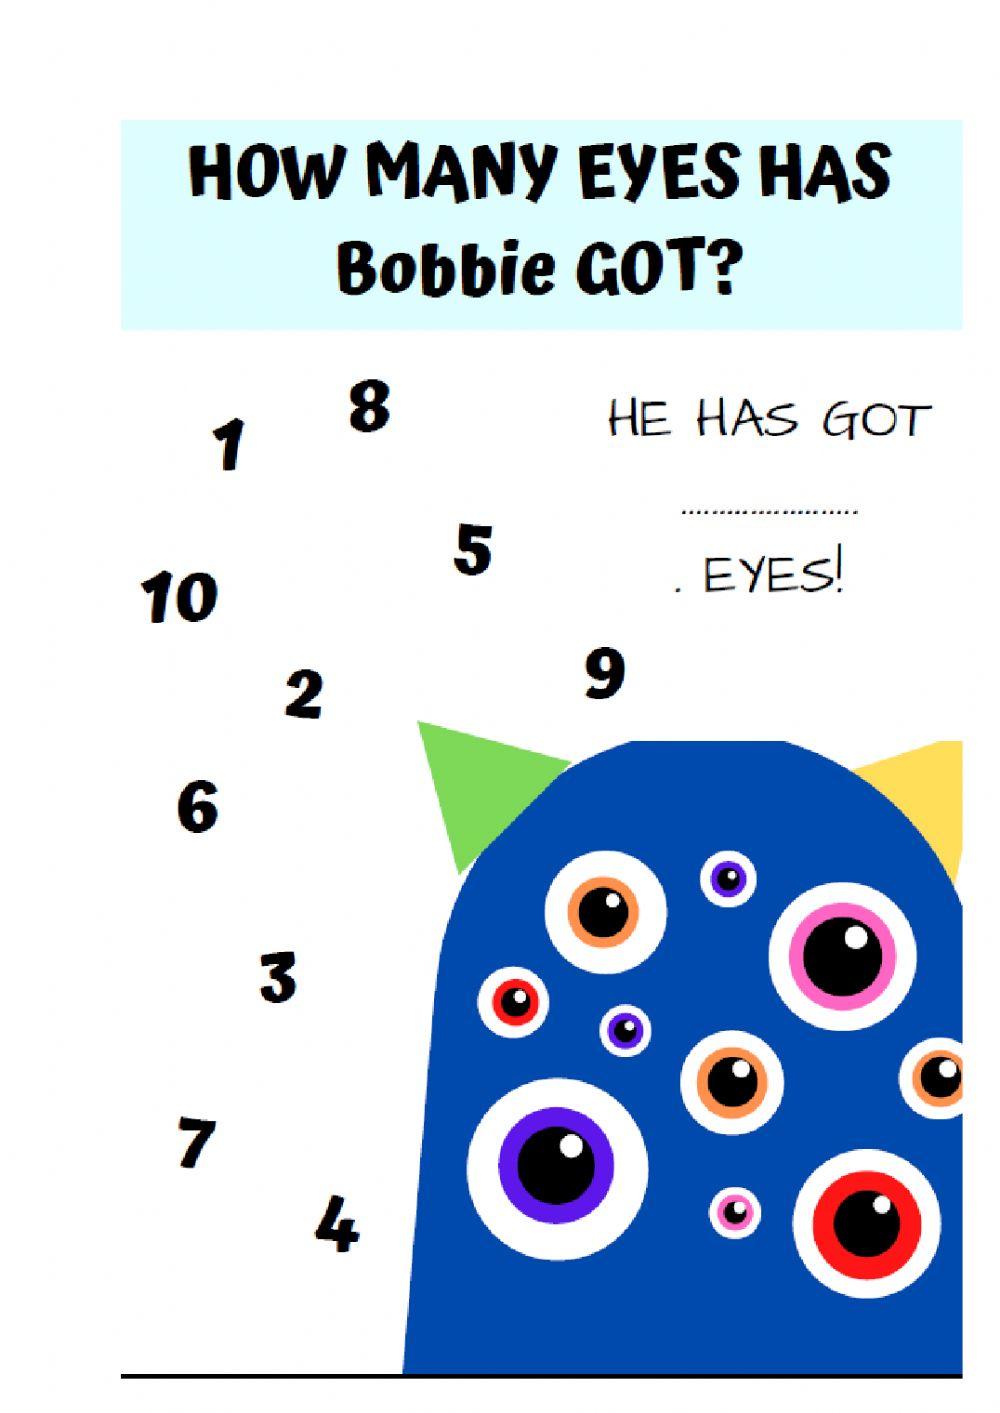 How many eyes has Bobby got?